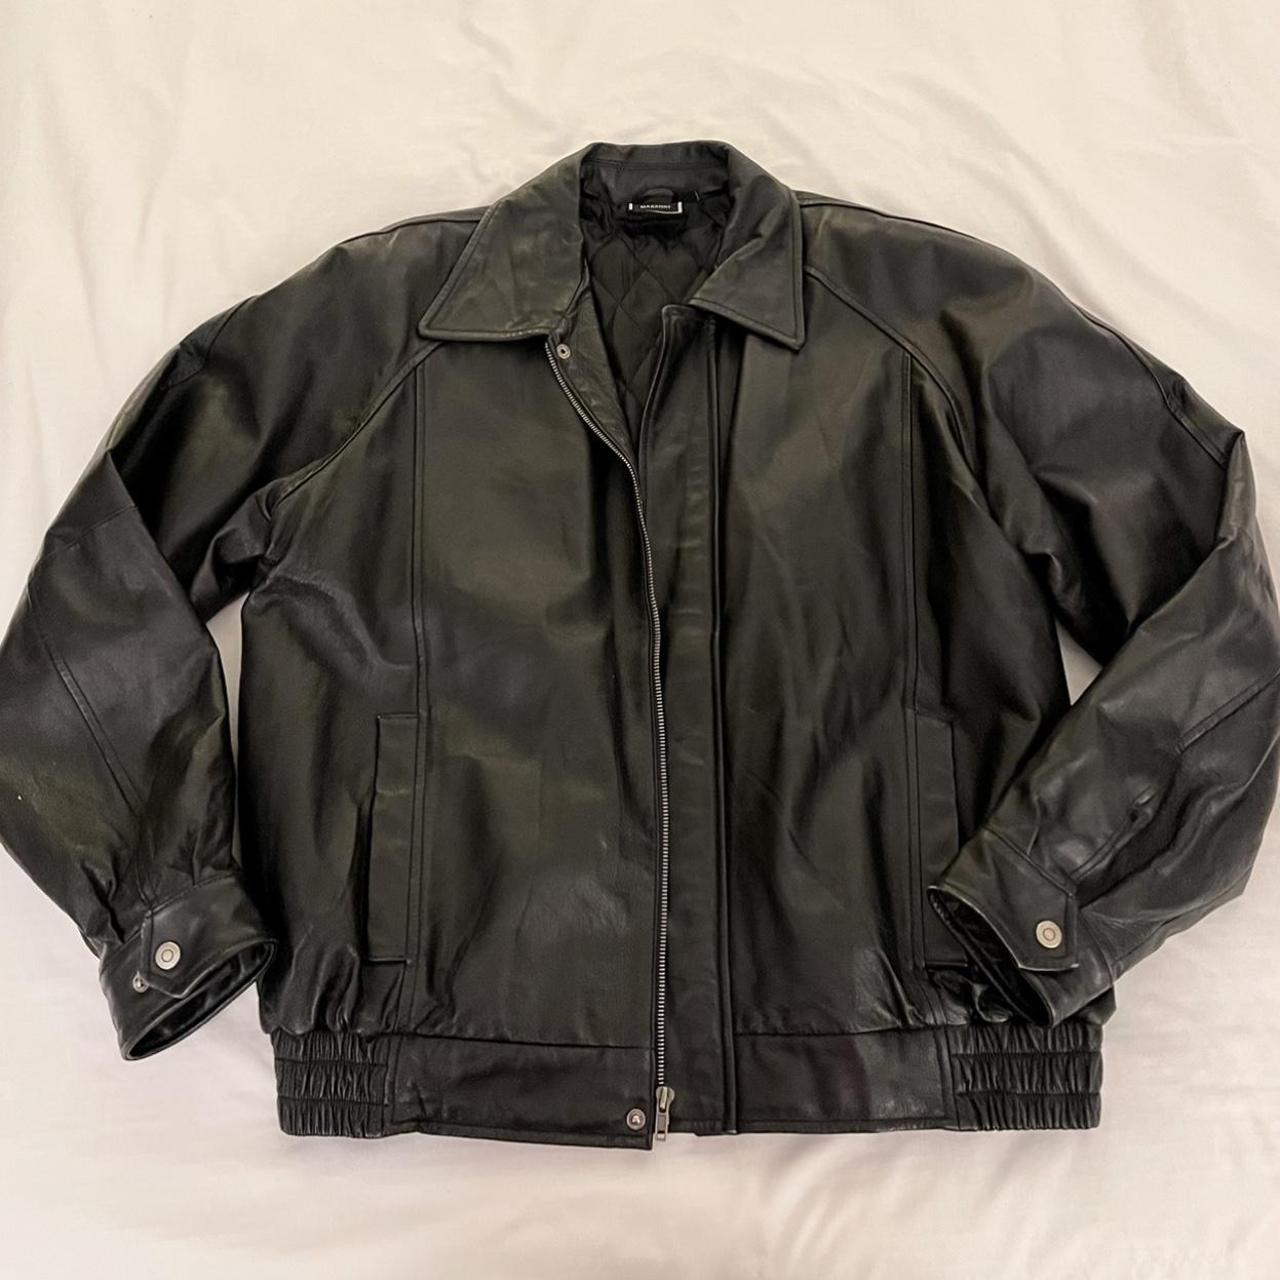 Vintage mazzoni leather jacket No tag but fits like... - Depop